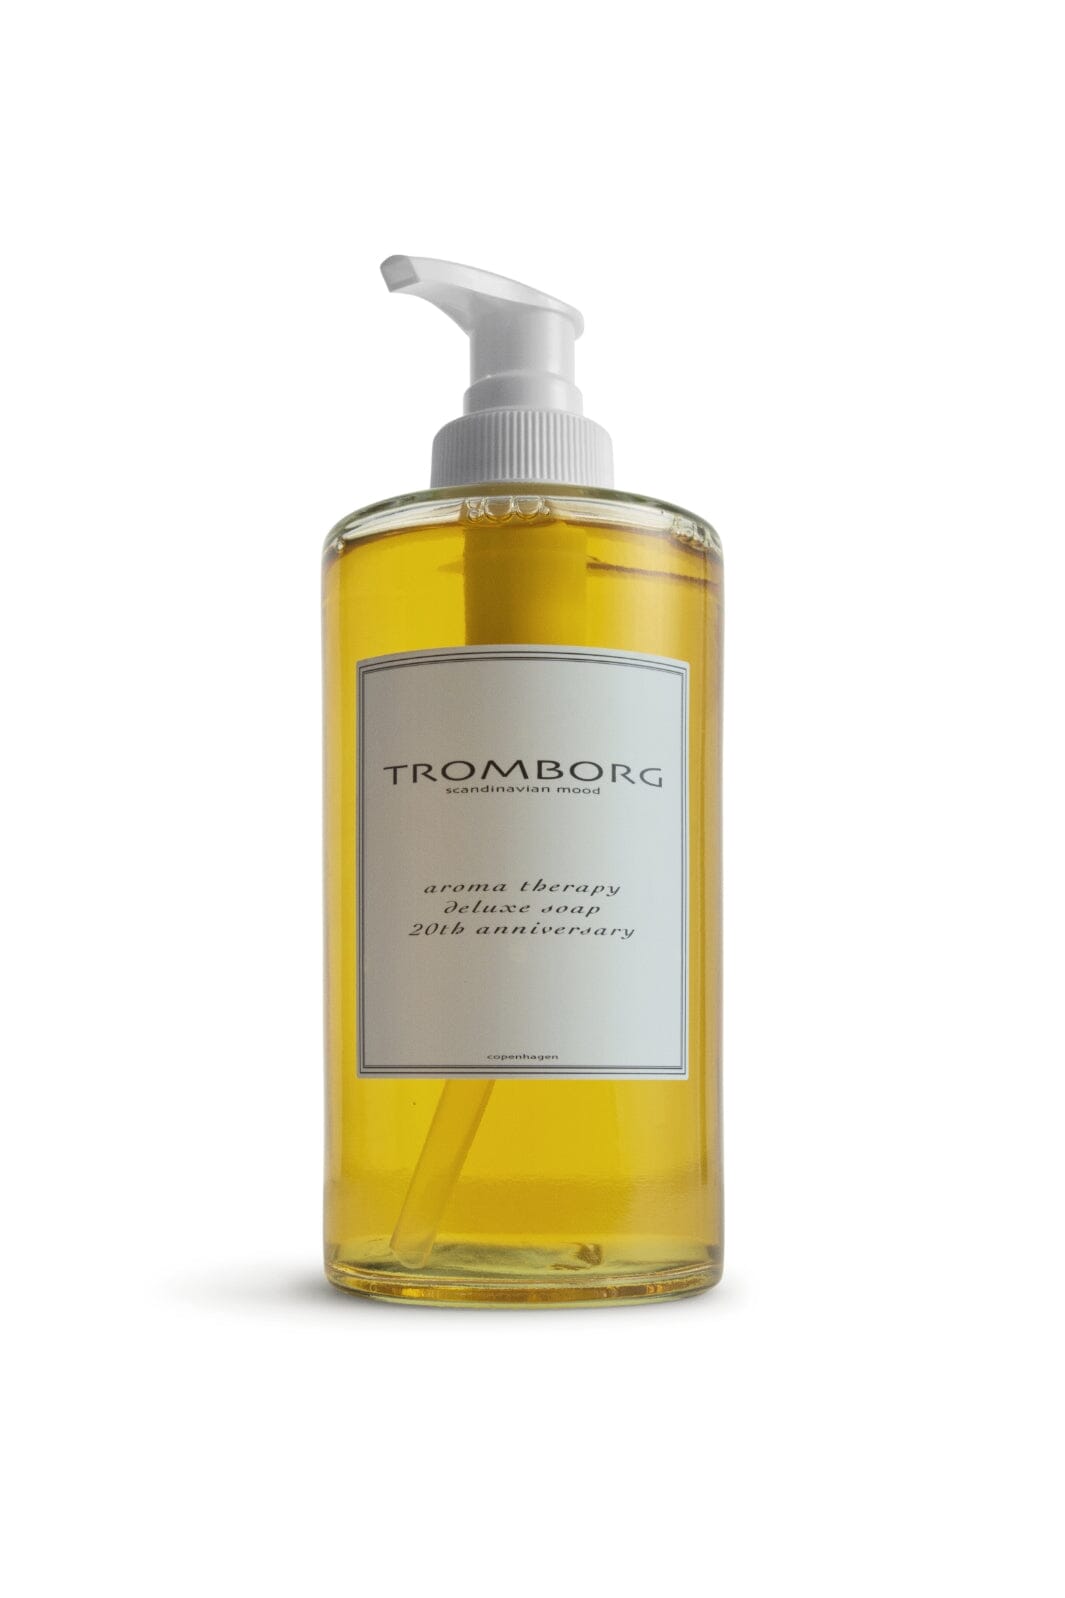 Tromborg - Aroma Therapy Deluxe Soap 20th anniversary Håndsæber 